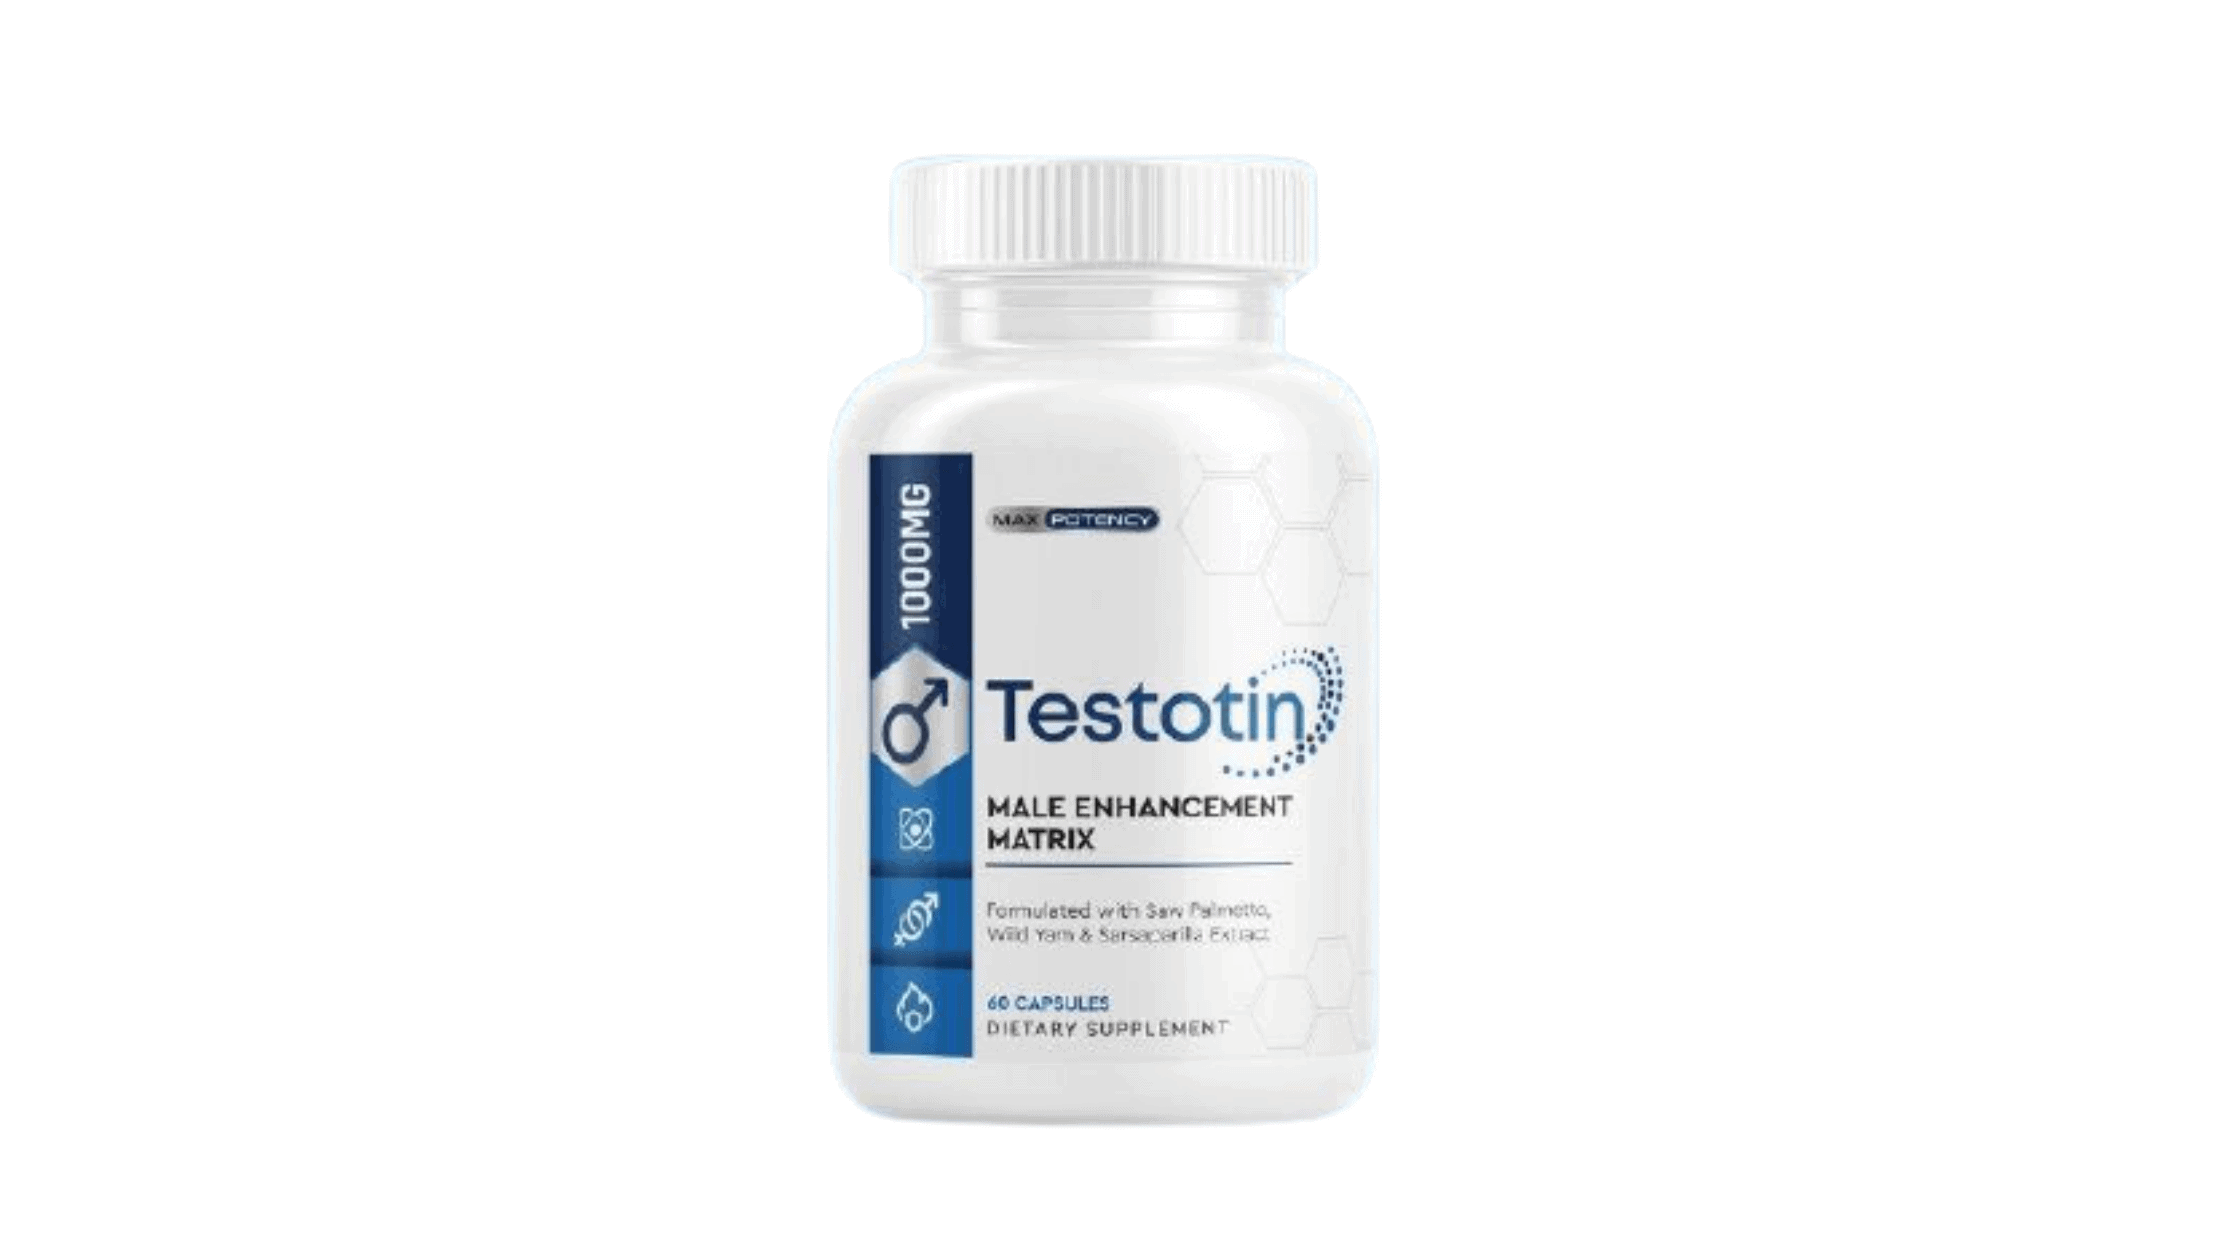 Testotin Reviews - Is This Male Enhancement Formula Worth The Money?